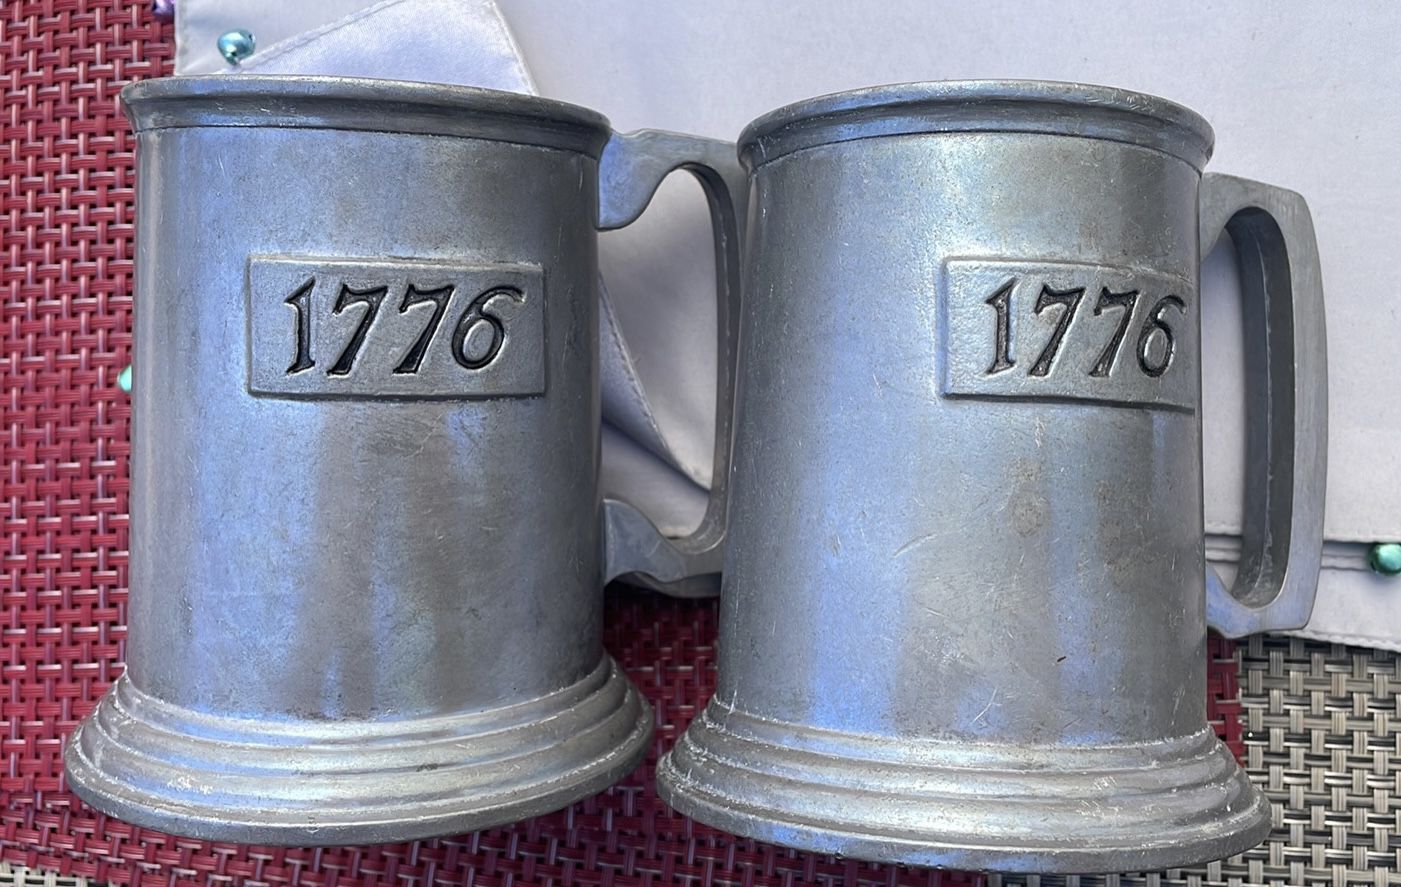 1776 Bicentennial Pewter Beer Stein Mug Tankard 4.75 Tall By Duratale By Leonard